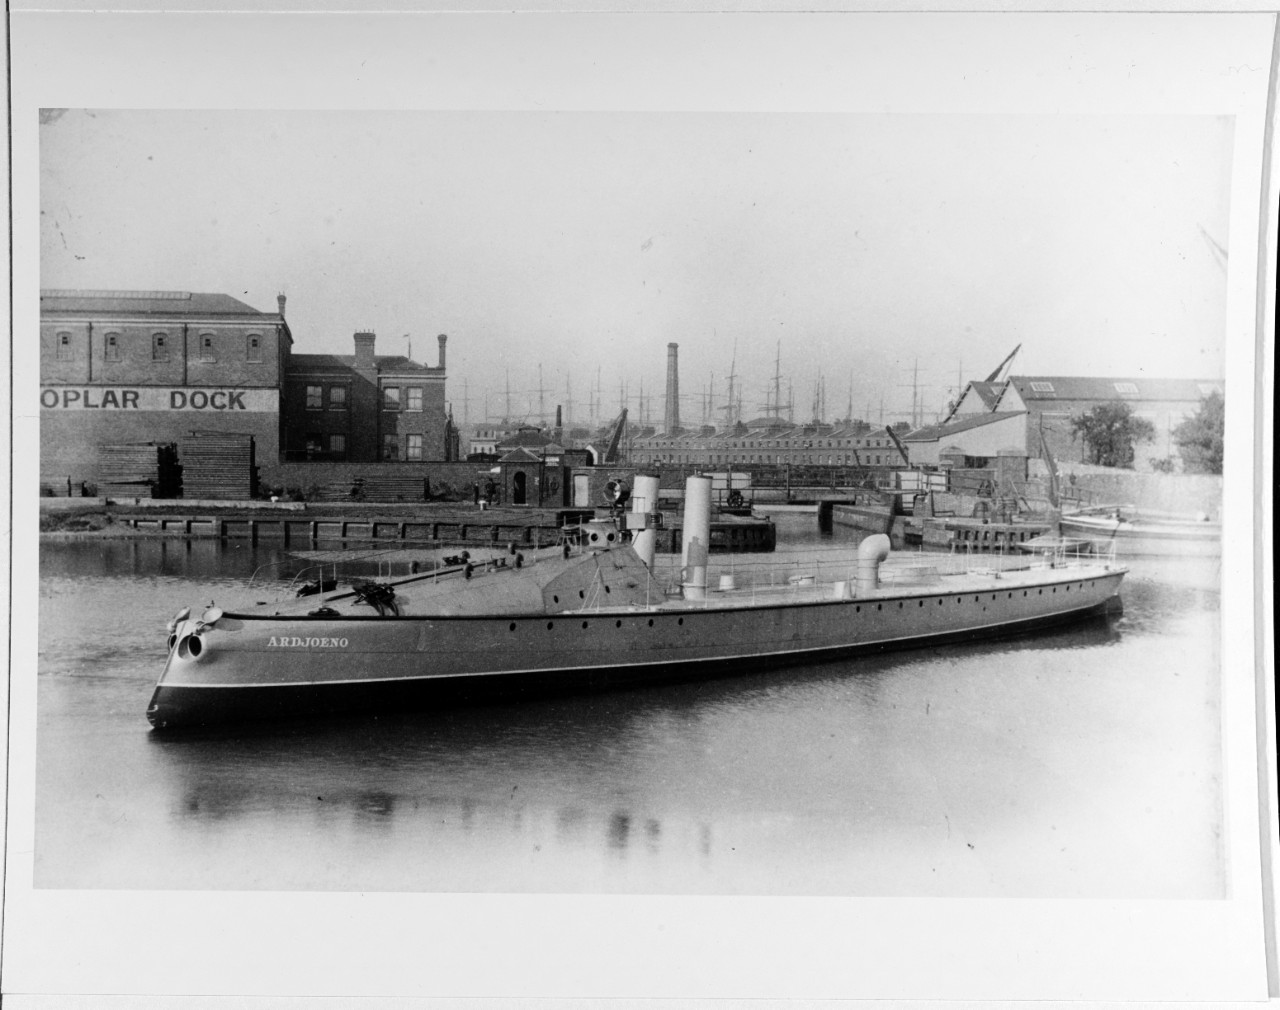 Dutch torpedo boat ARDJOENO, built by Yarrow in 1886.